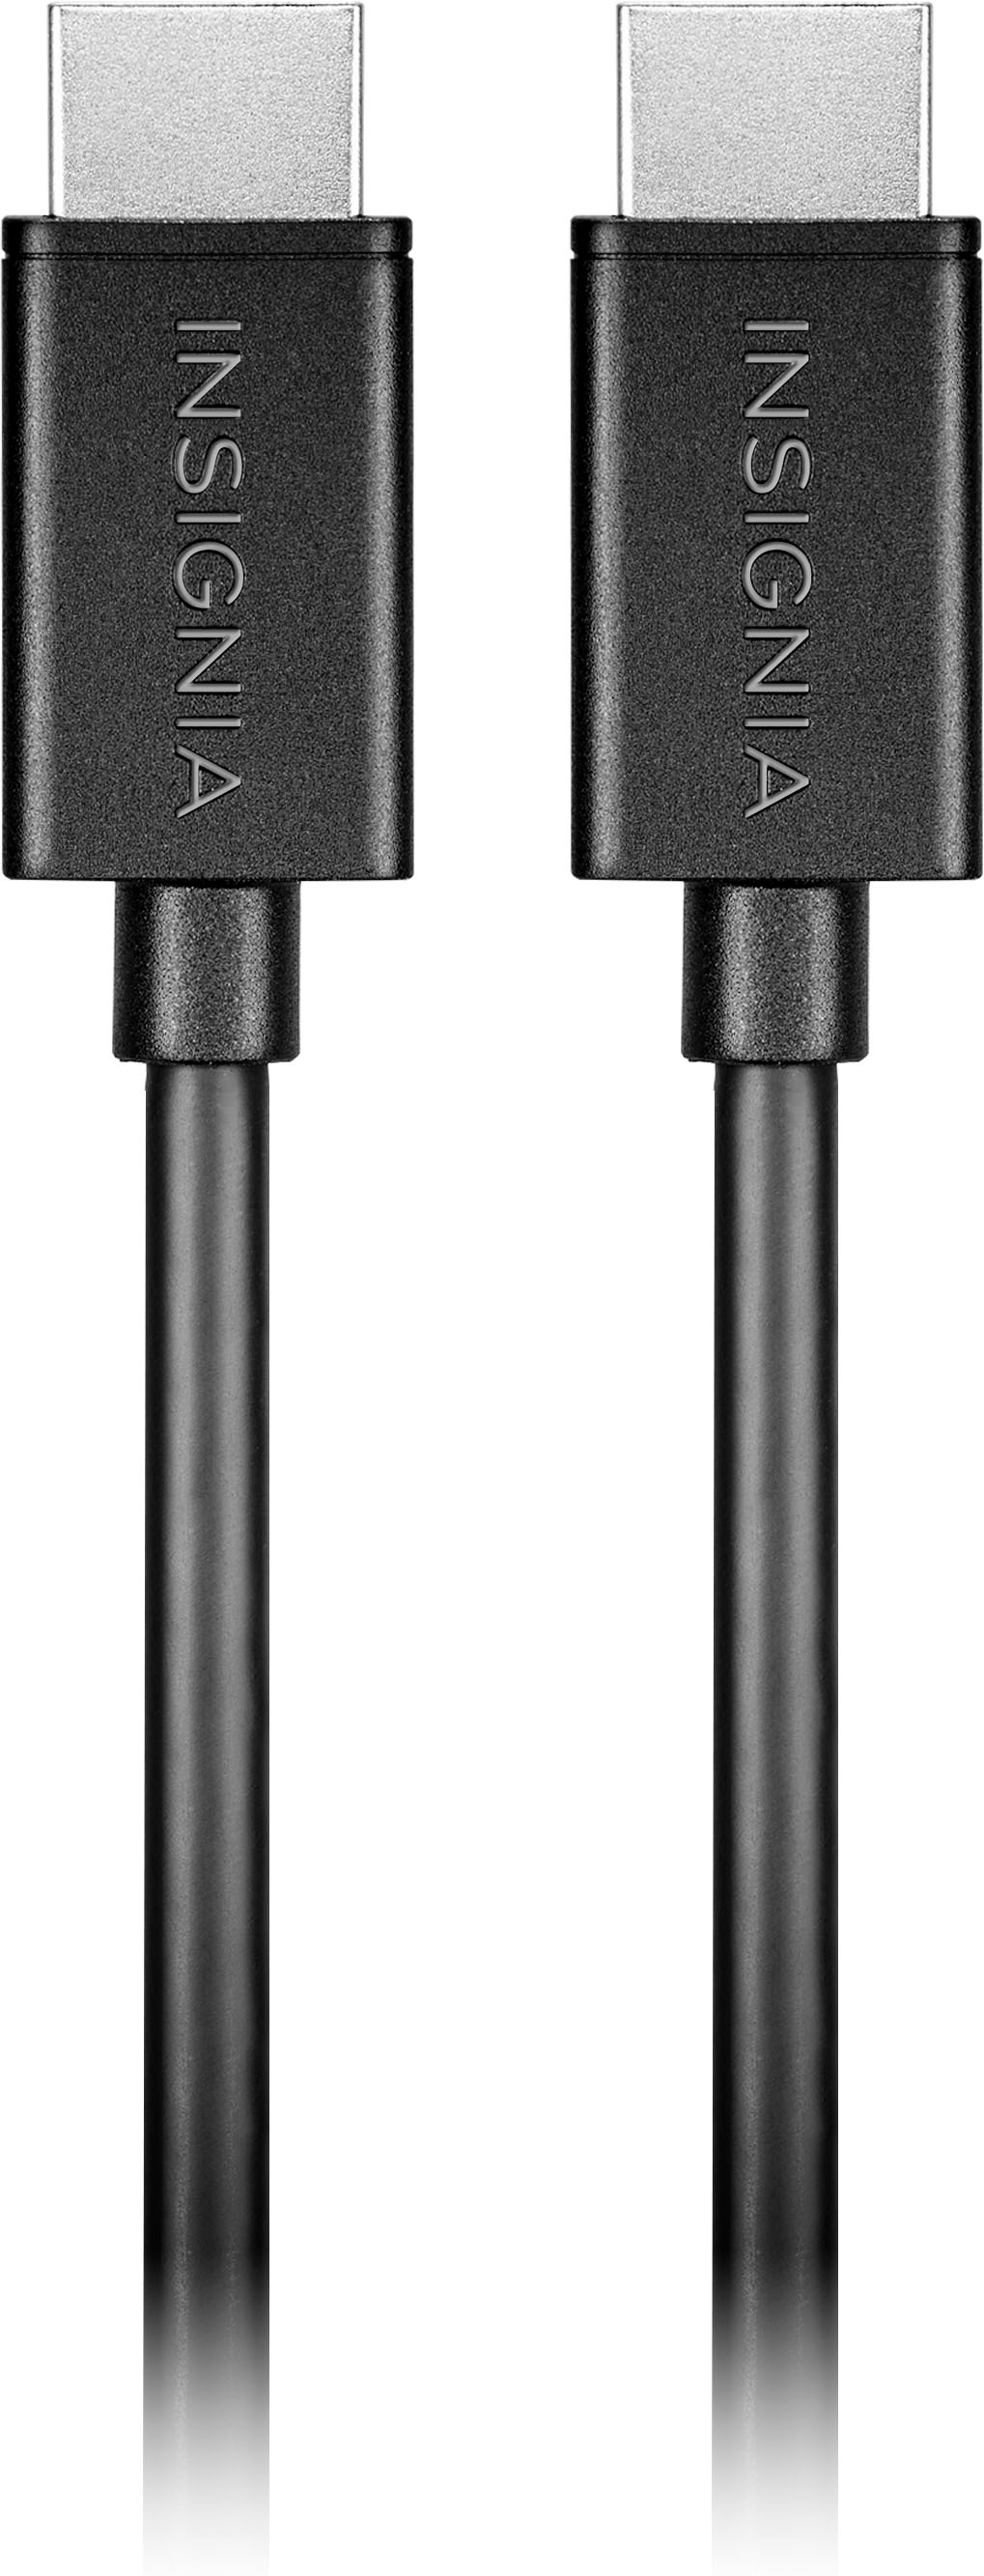 Insignia 4K Ultra HD HDMI Cable - Black - 12 ft